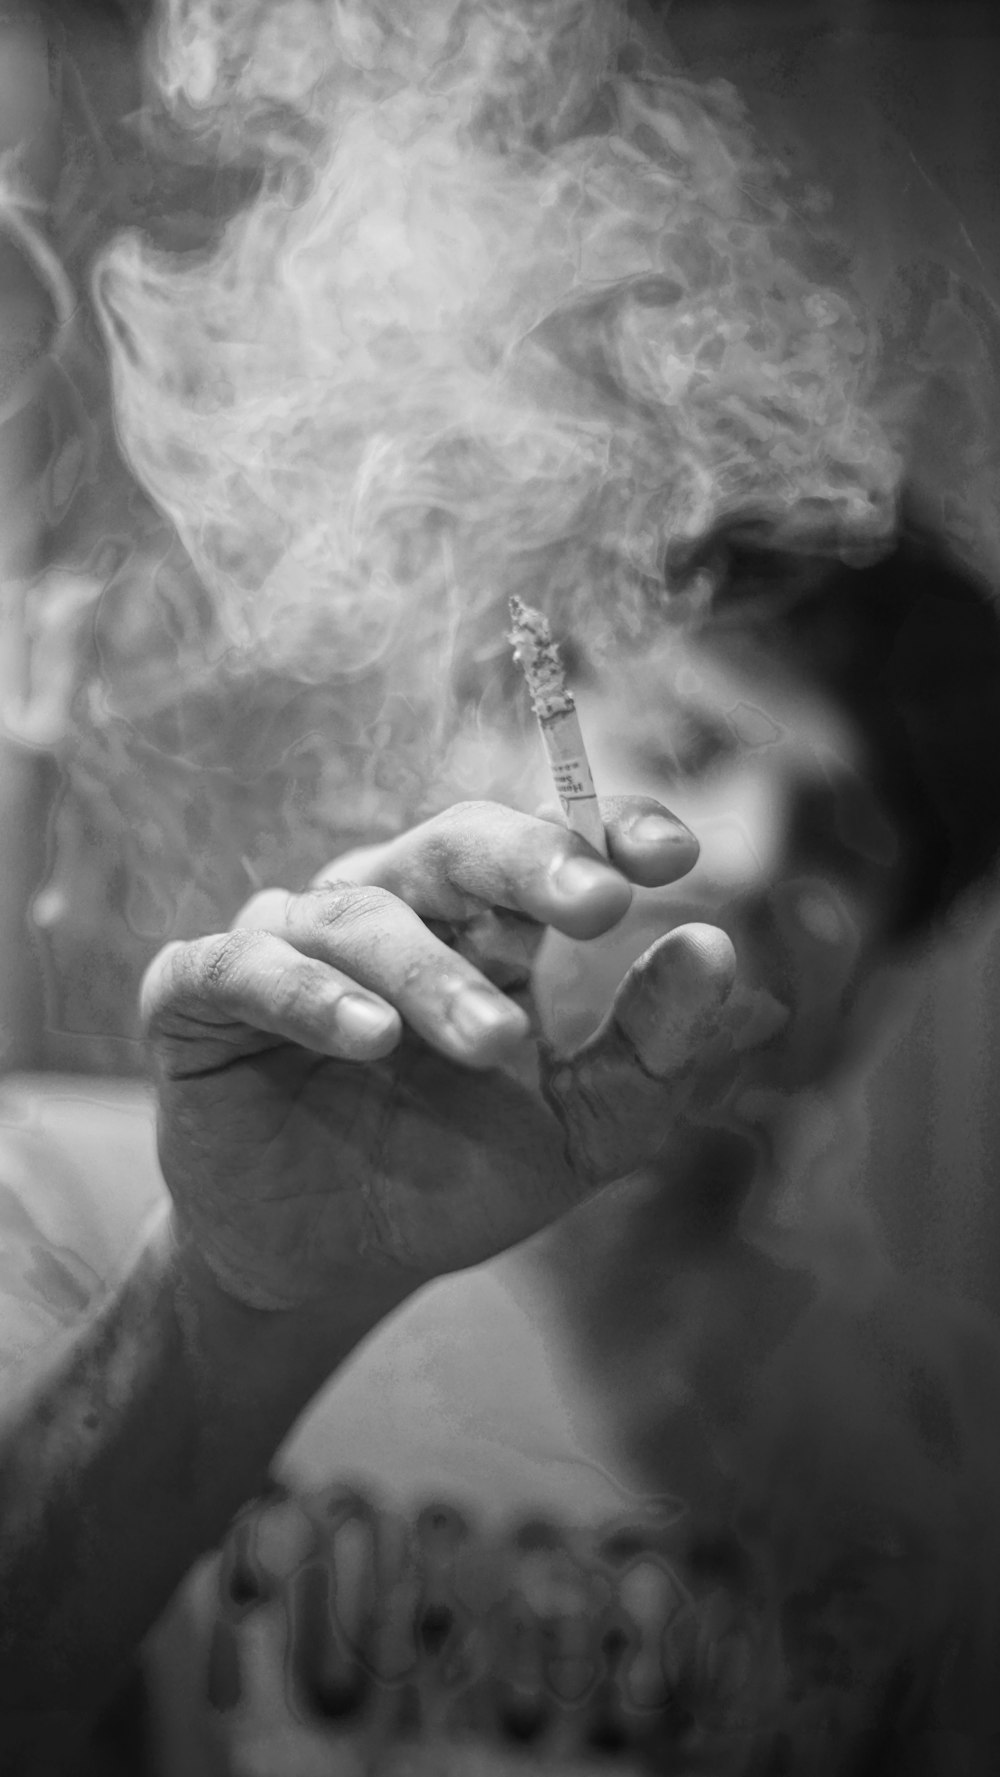 grayscale photo of person holding cigarette stick